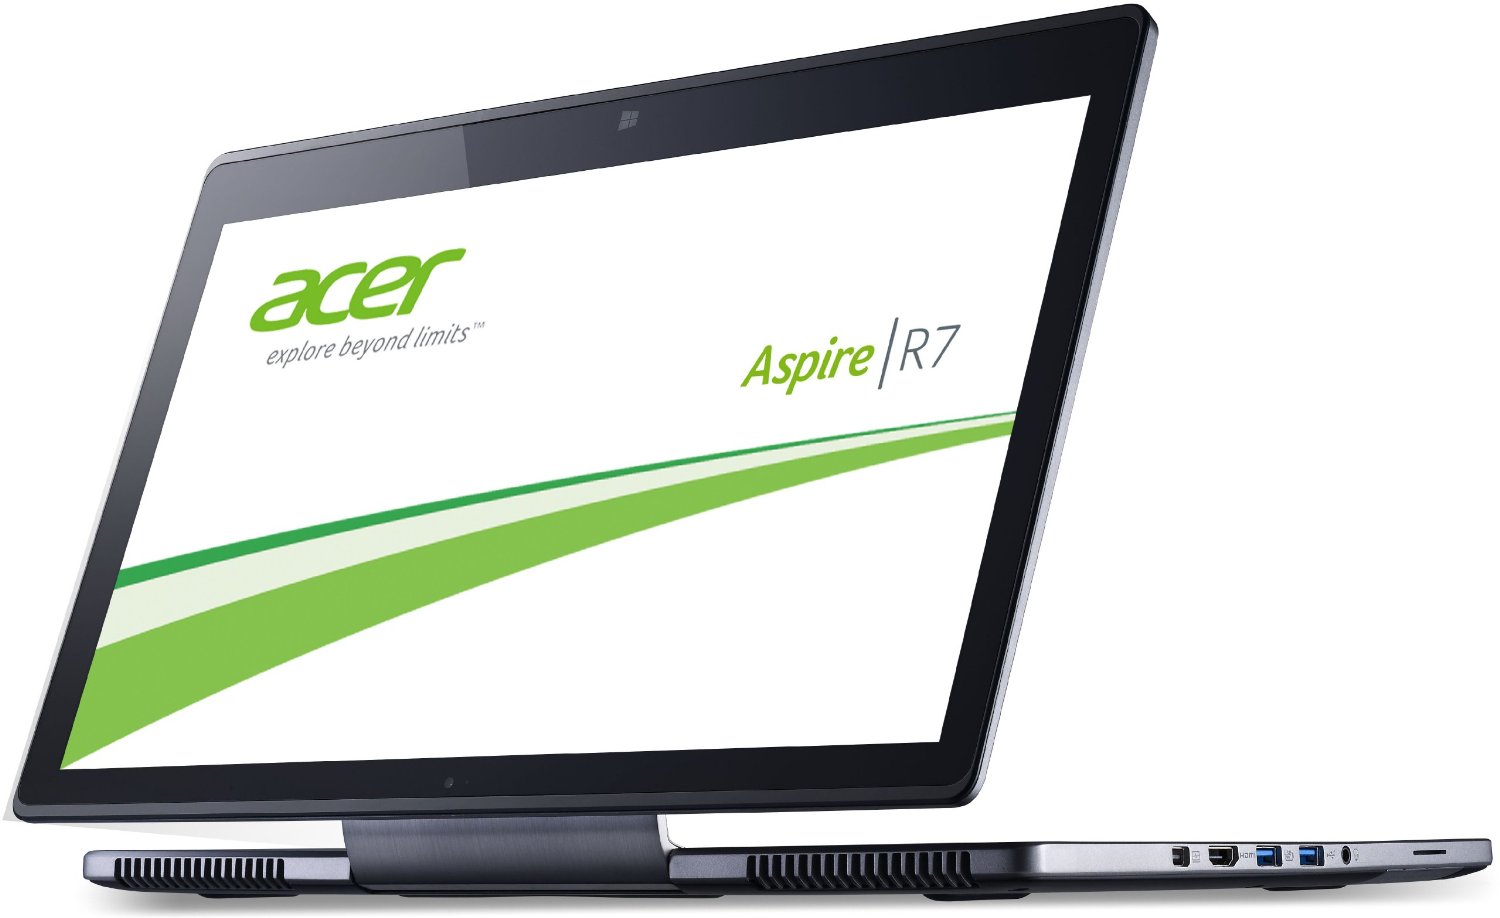 Acer Aspire R7 571g 7353121tass Notebookcheck It